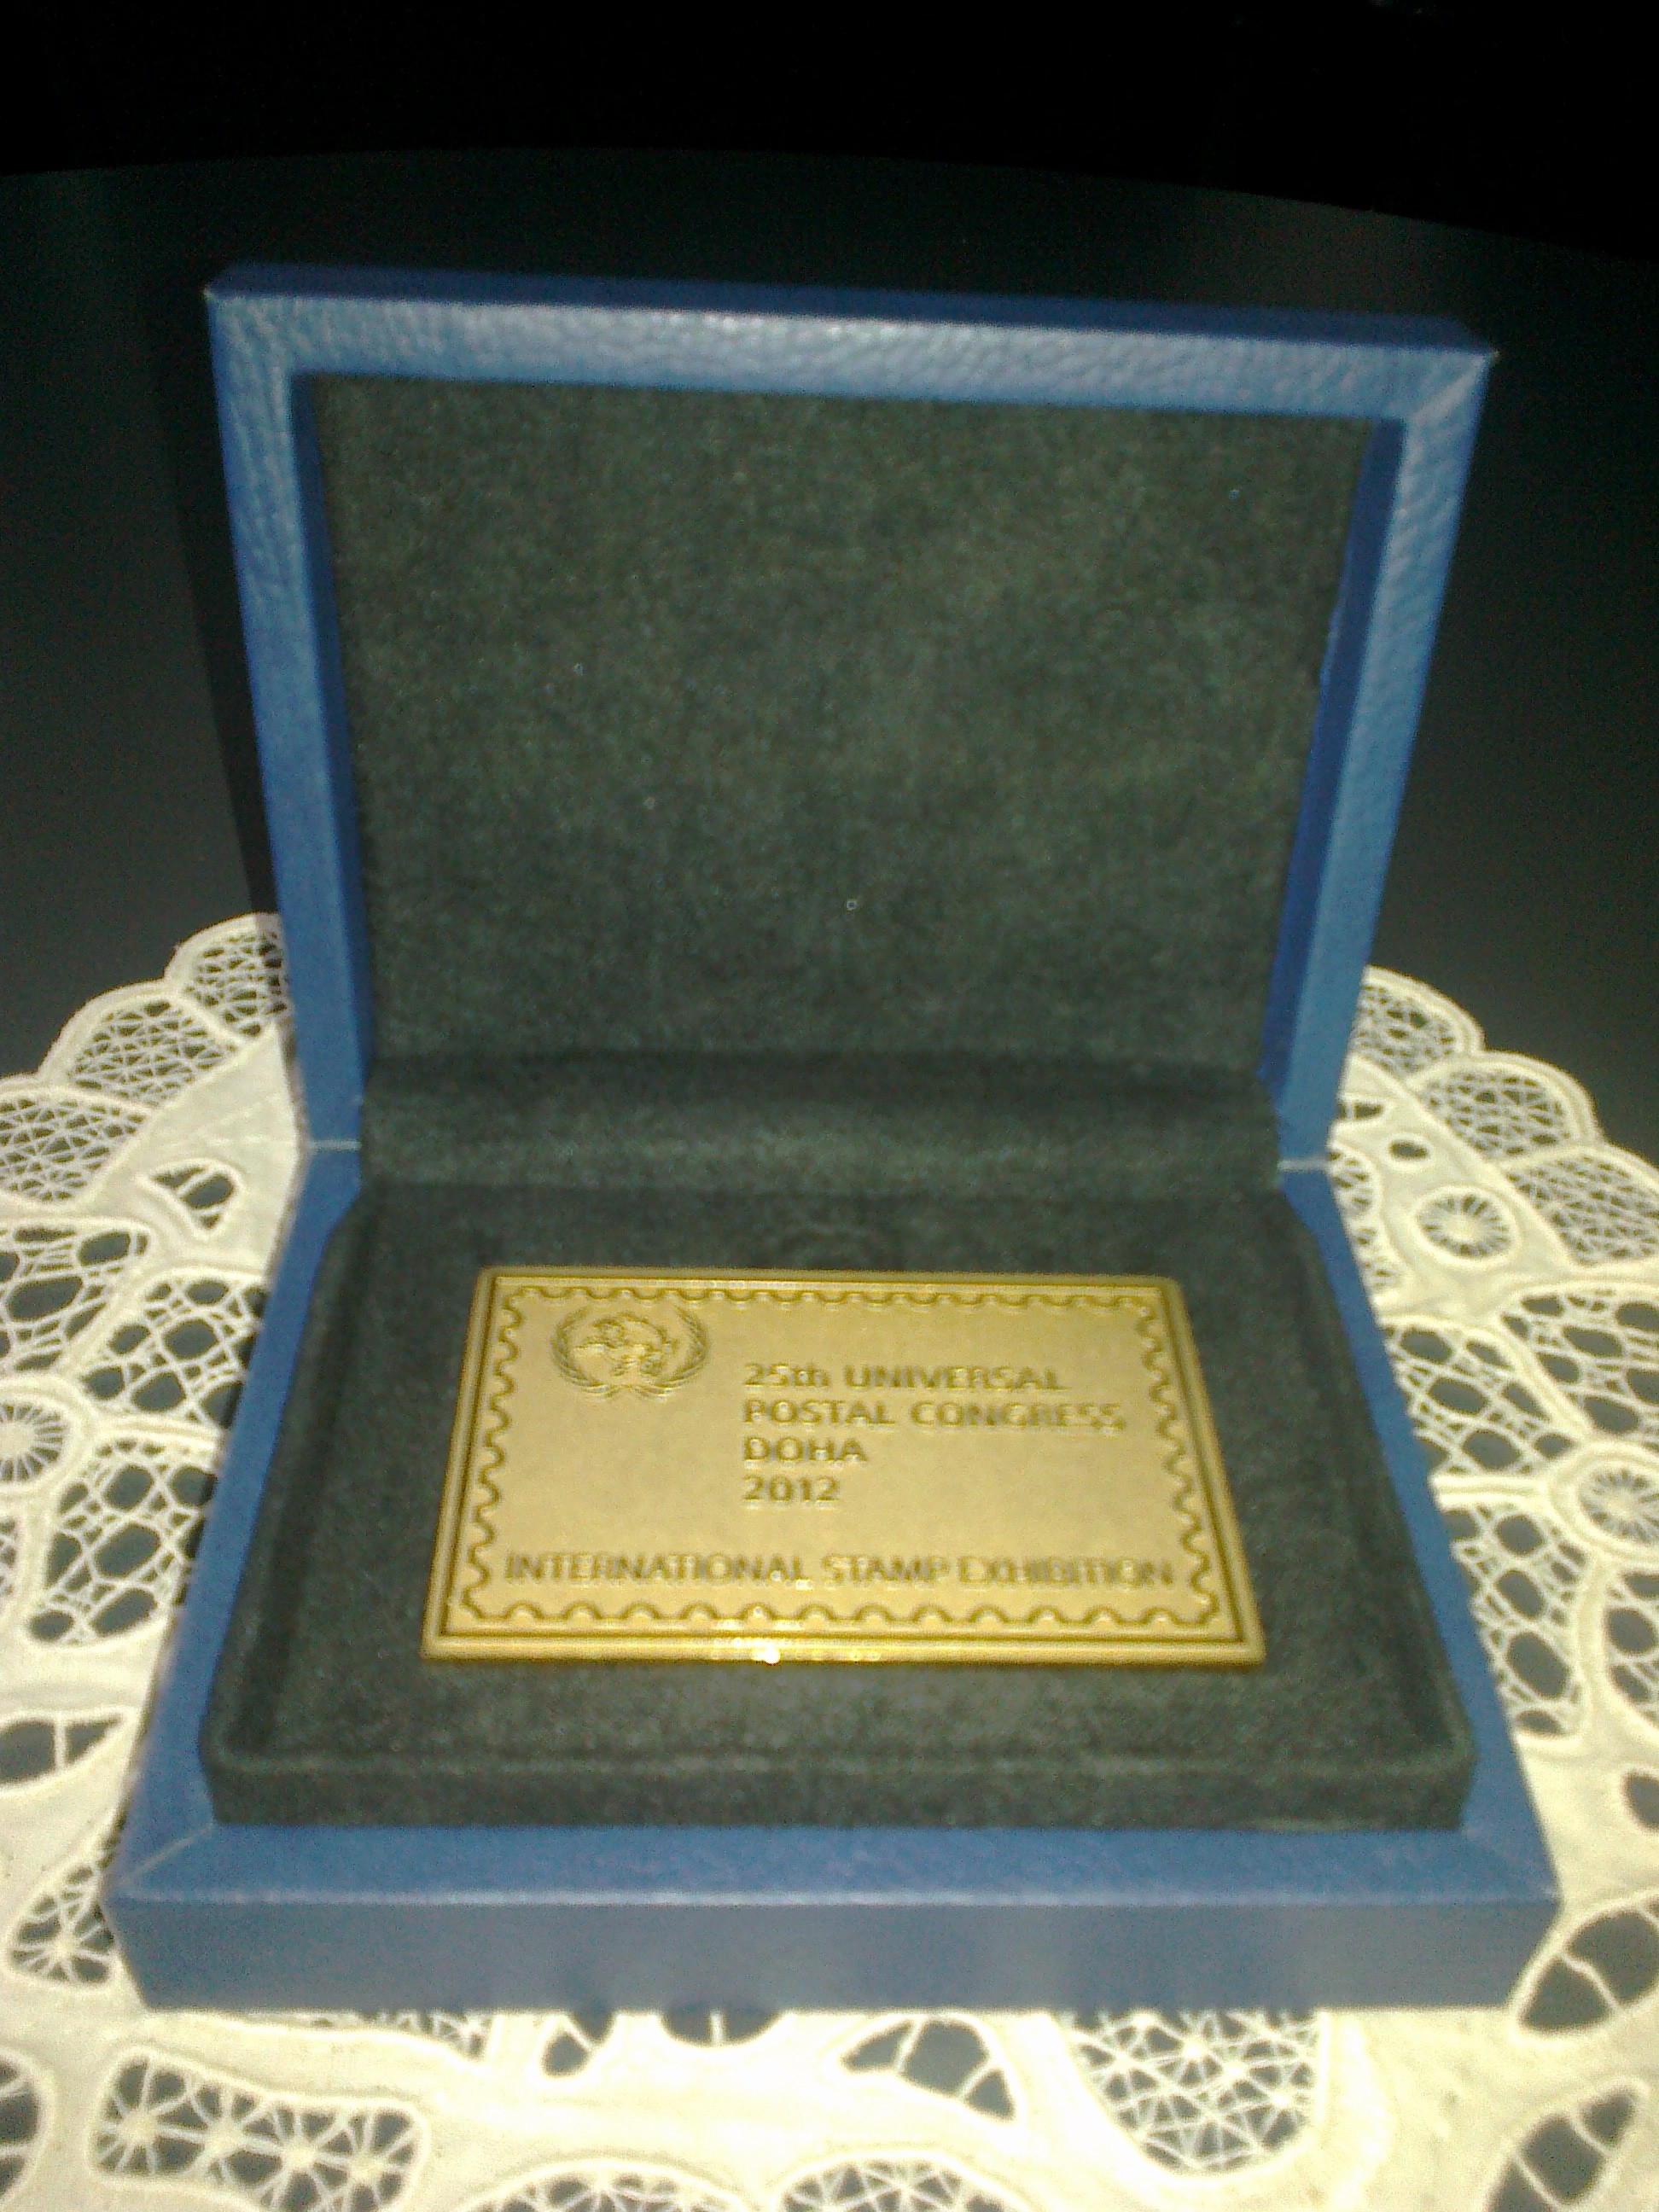 Ocenenie na 25. svetovom poštovom kongrese v Dohe 2012